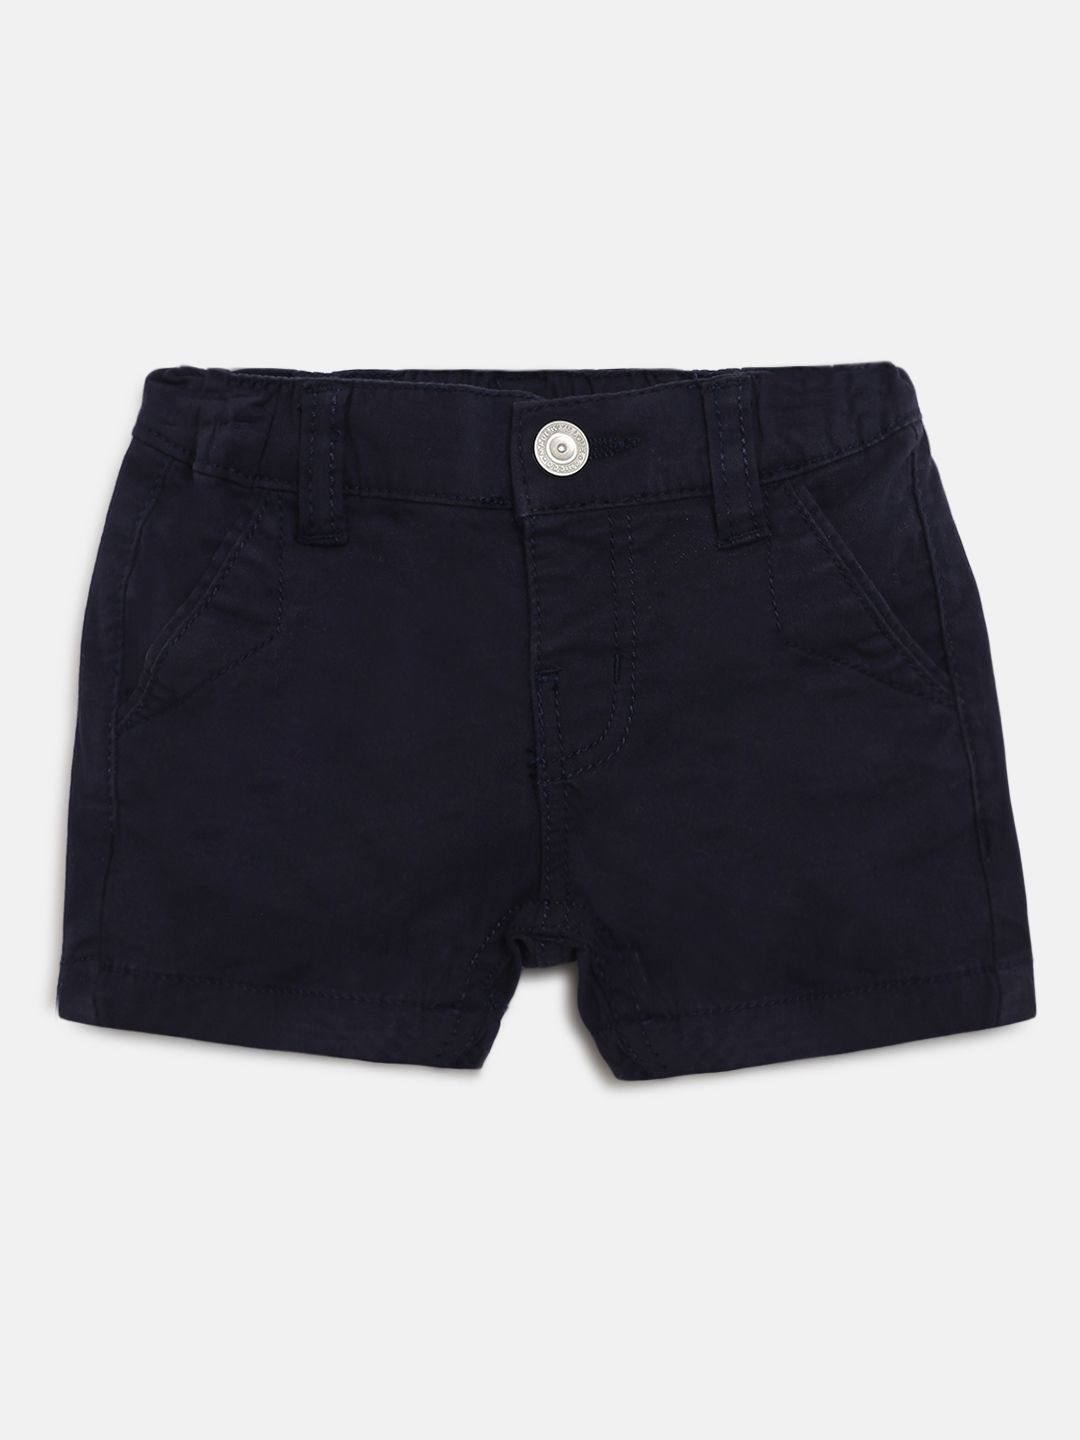 Navy Blue Twill Shorts-Navy Blue